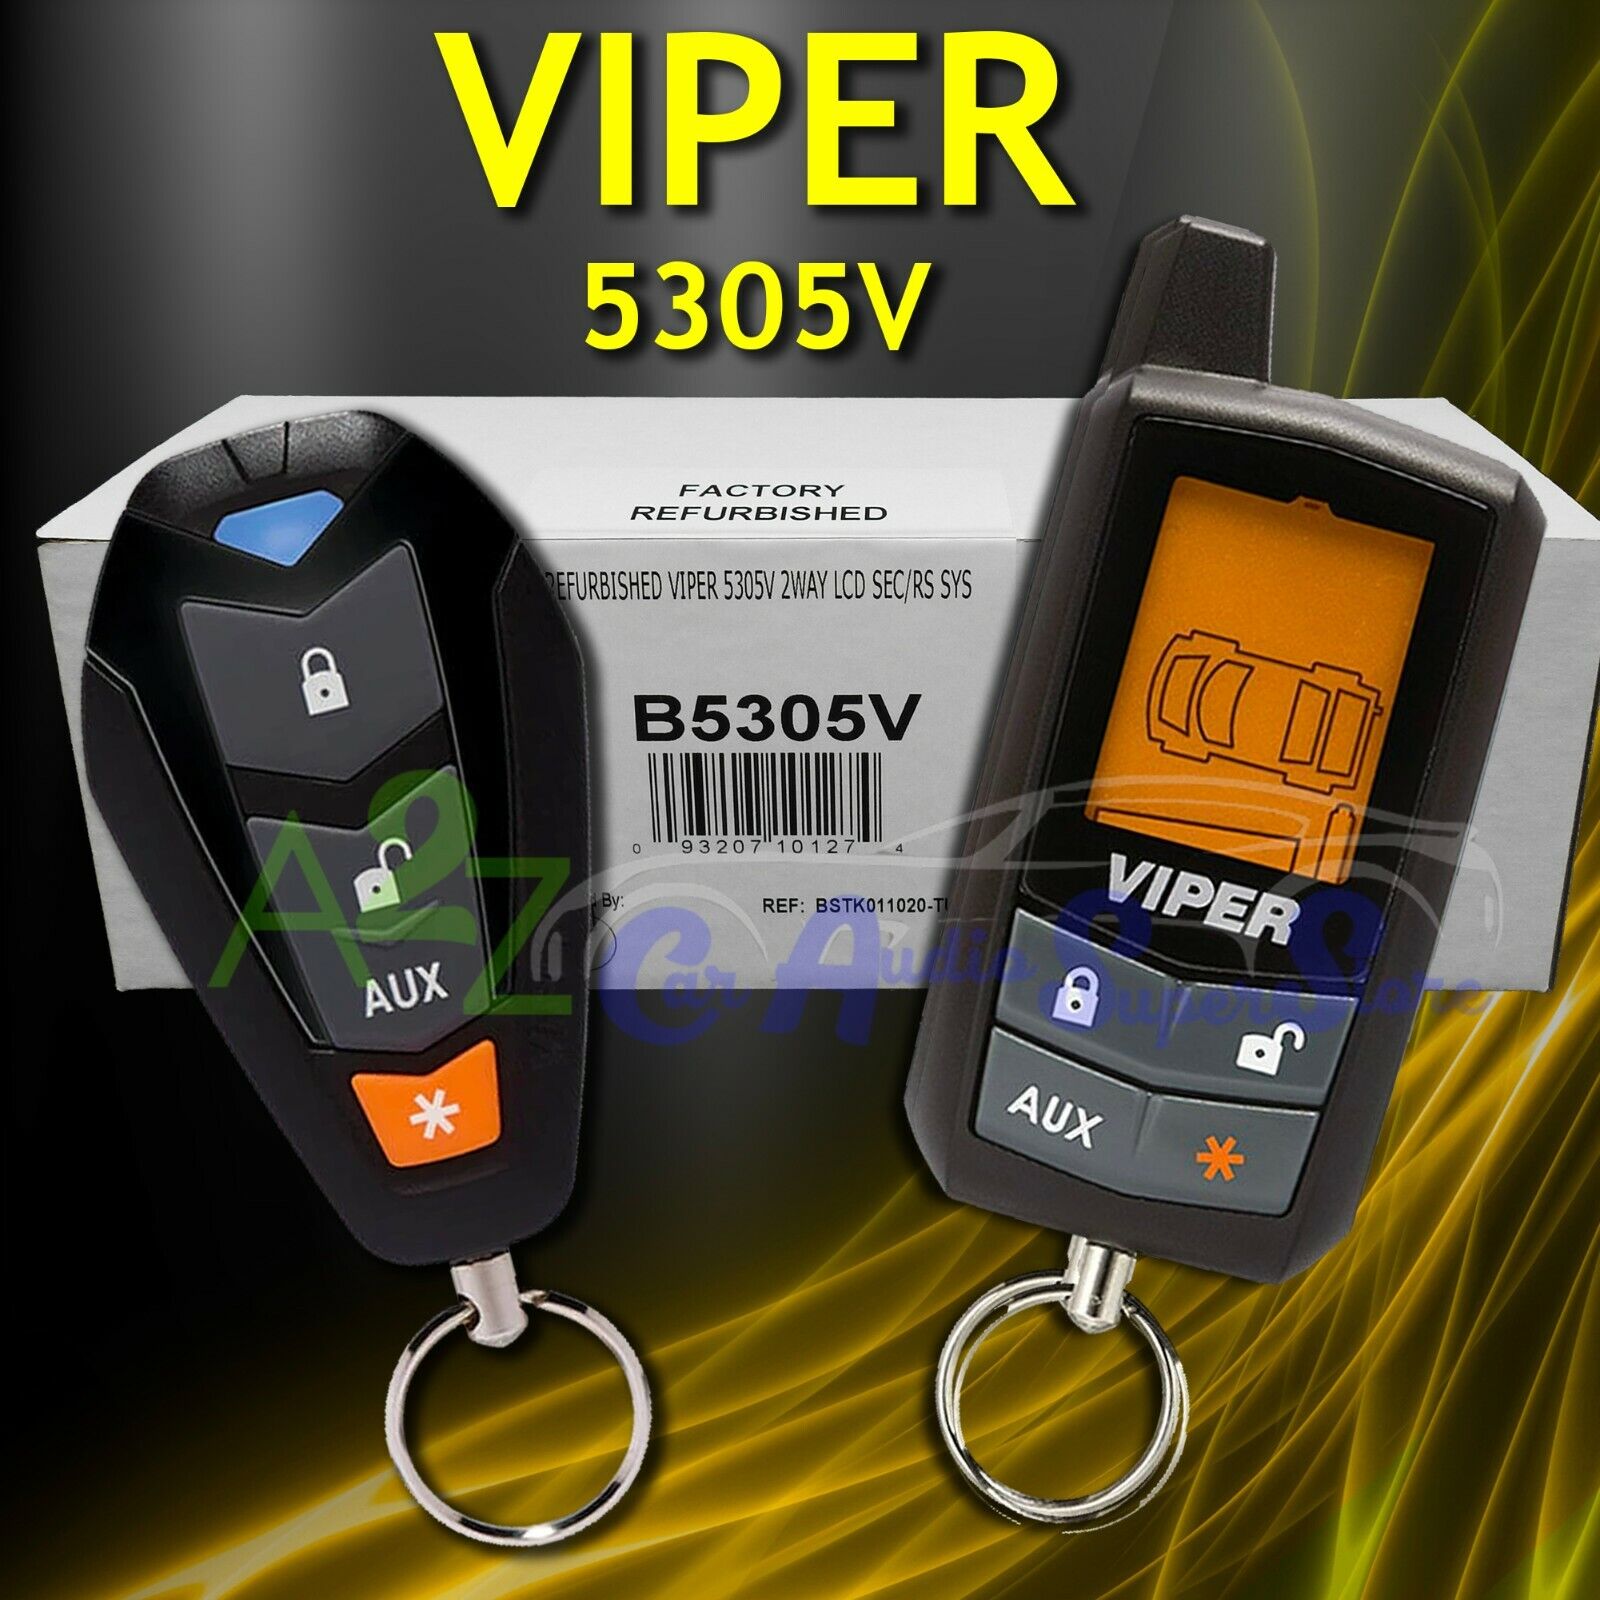 VIPER 5305V 2 WAY LCD VEHICLE CAR ALARM KEYLESS ENTRY REMOTE START SYSTEM